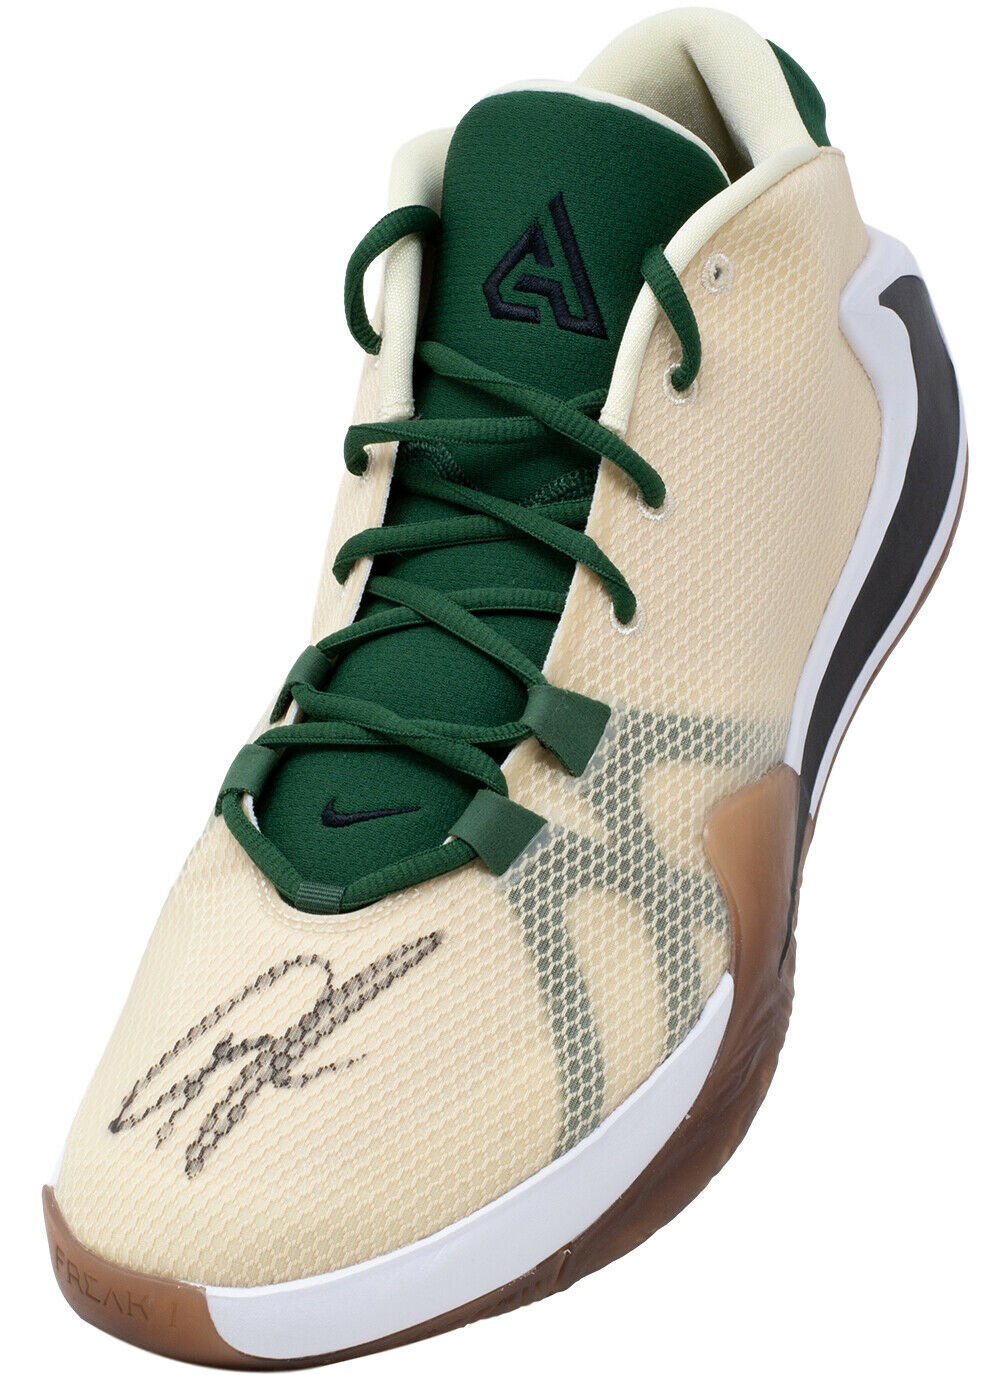 Giannis Greek Freak Antetokounmpo Signed Left Cream Nike Zoom Freak 1 Shoe JSA - Sports